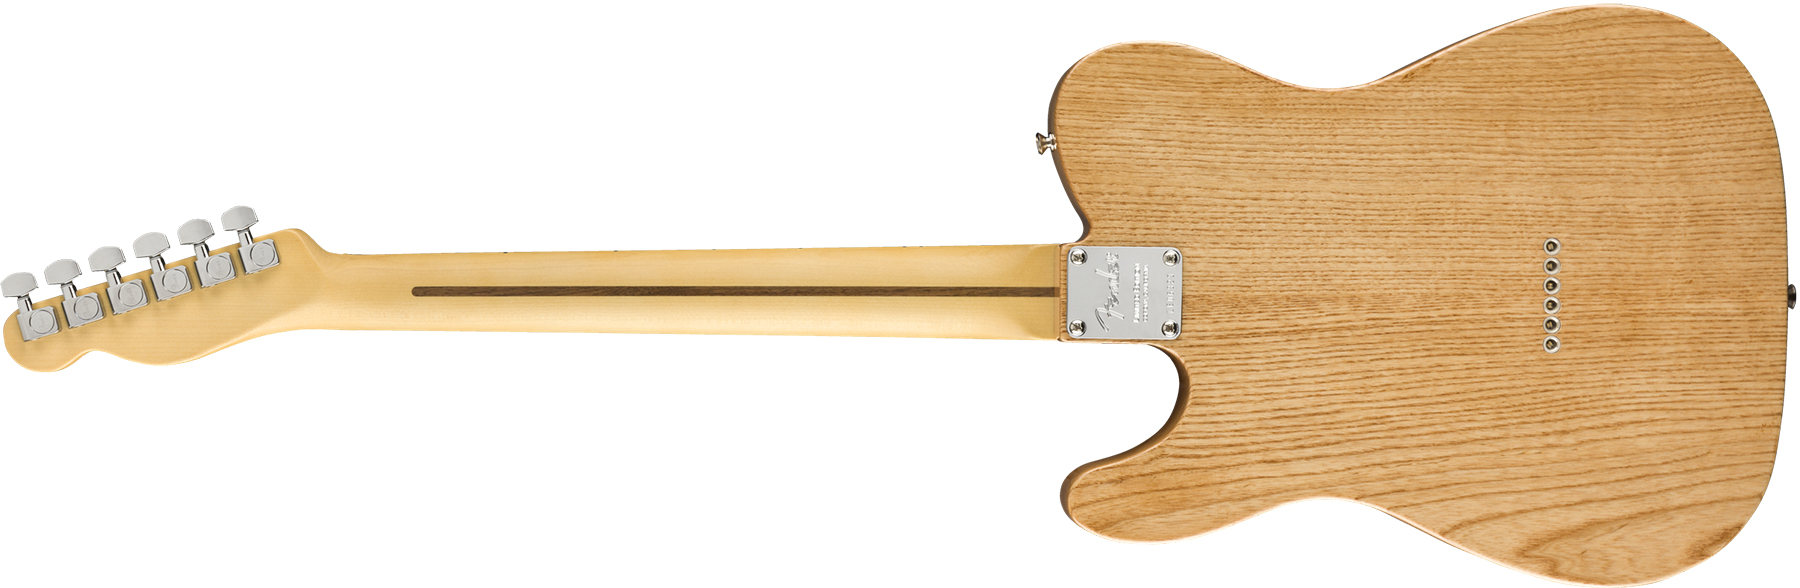 Fender Tele Quilt Maple Top Rarities Usa Mn - Blue Cloud - Televorm elektrische gitaar - Variation 1